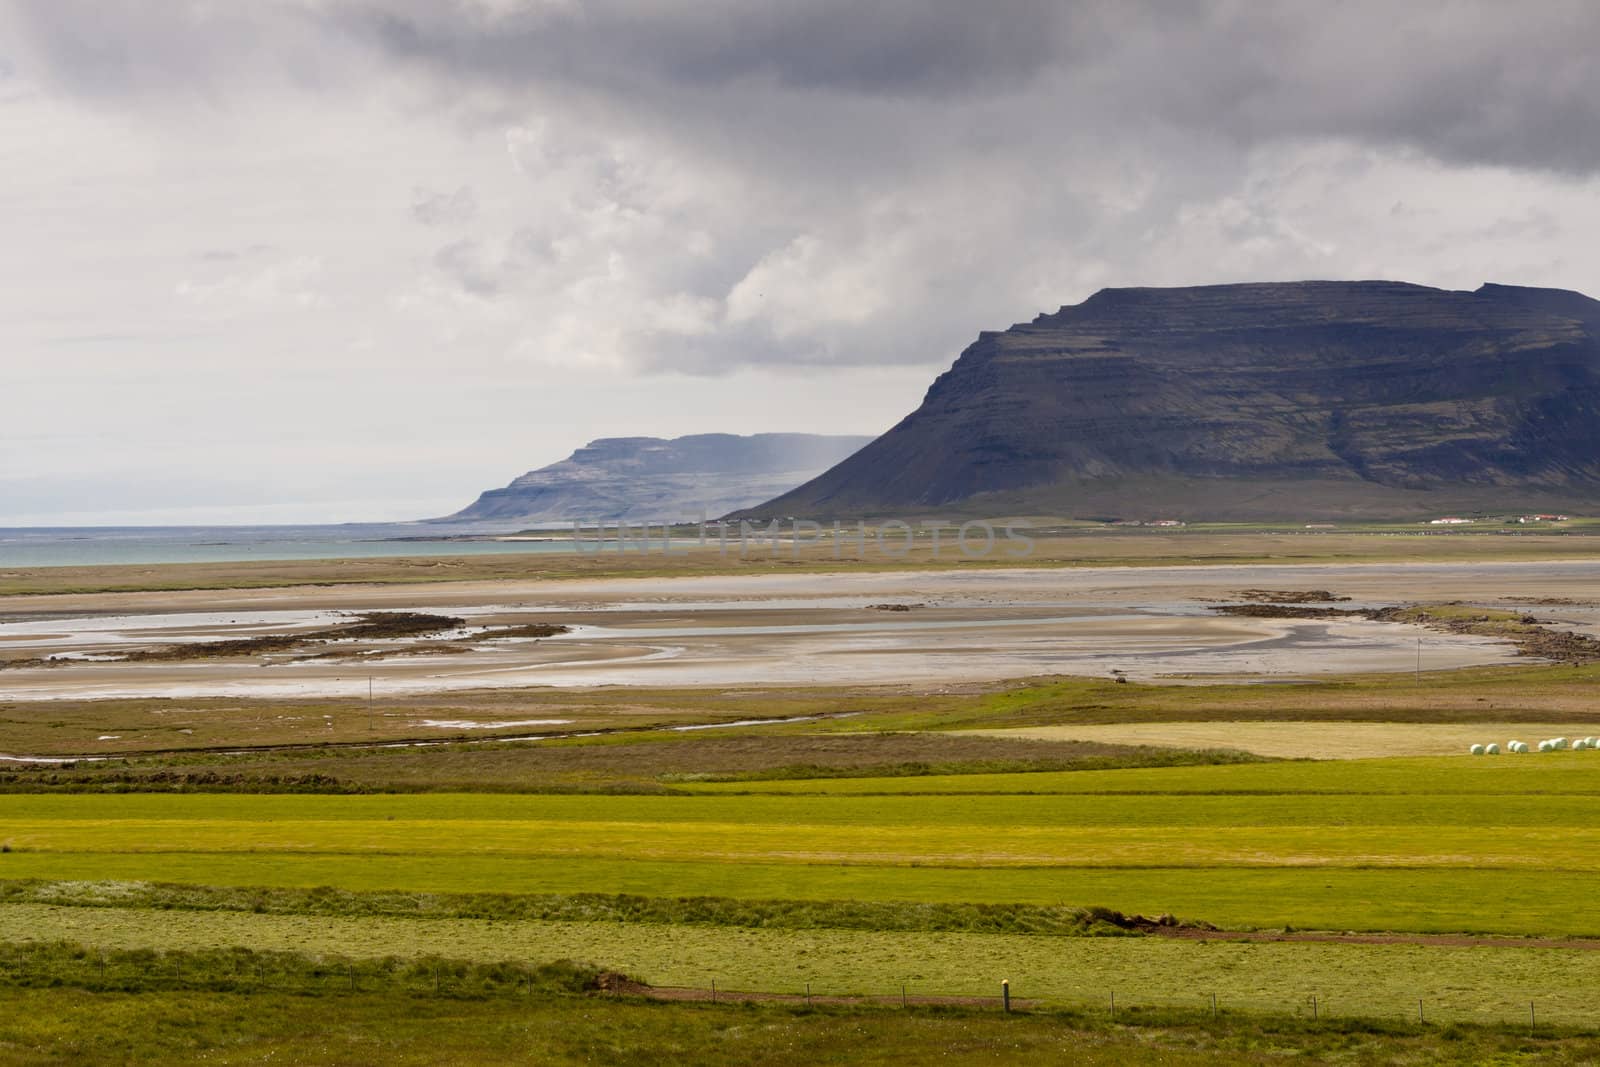 Green farm, vestfjords in background big stony cliffs - Iceland